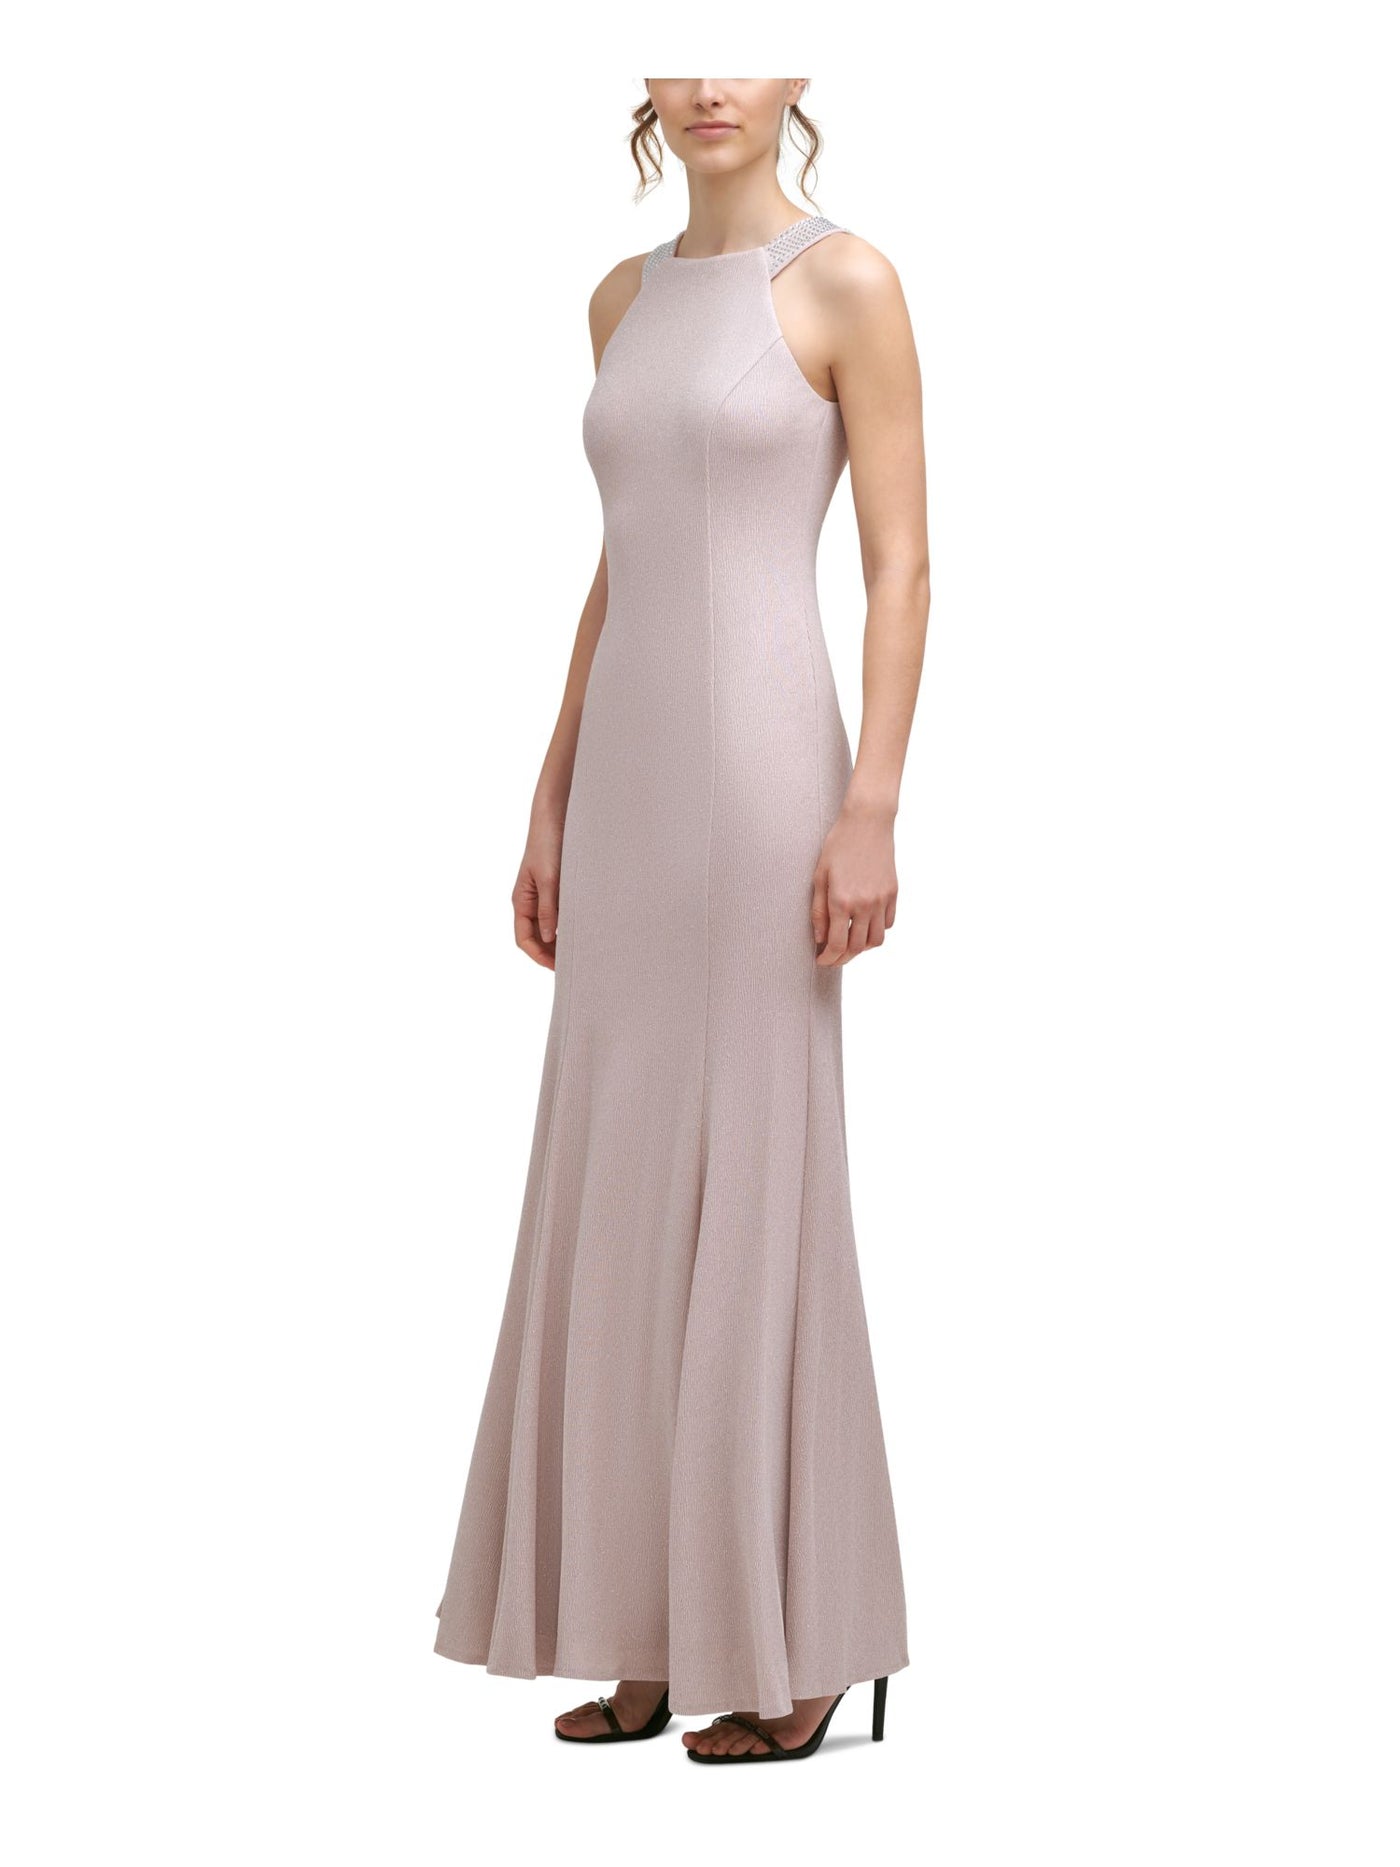 CALVIN KLEIN Womens Beige Stretch Zippered Embellished Halter Full-Length Evening Gown Dress 14